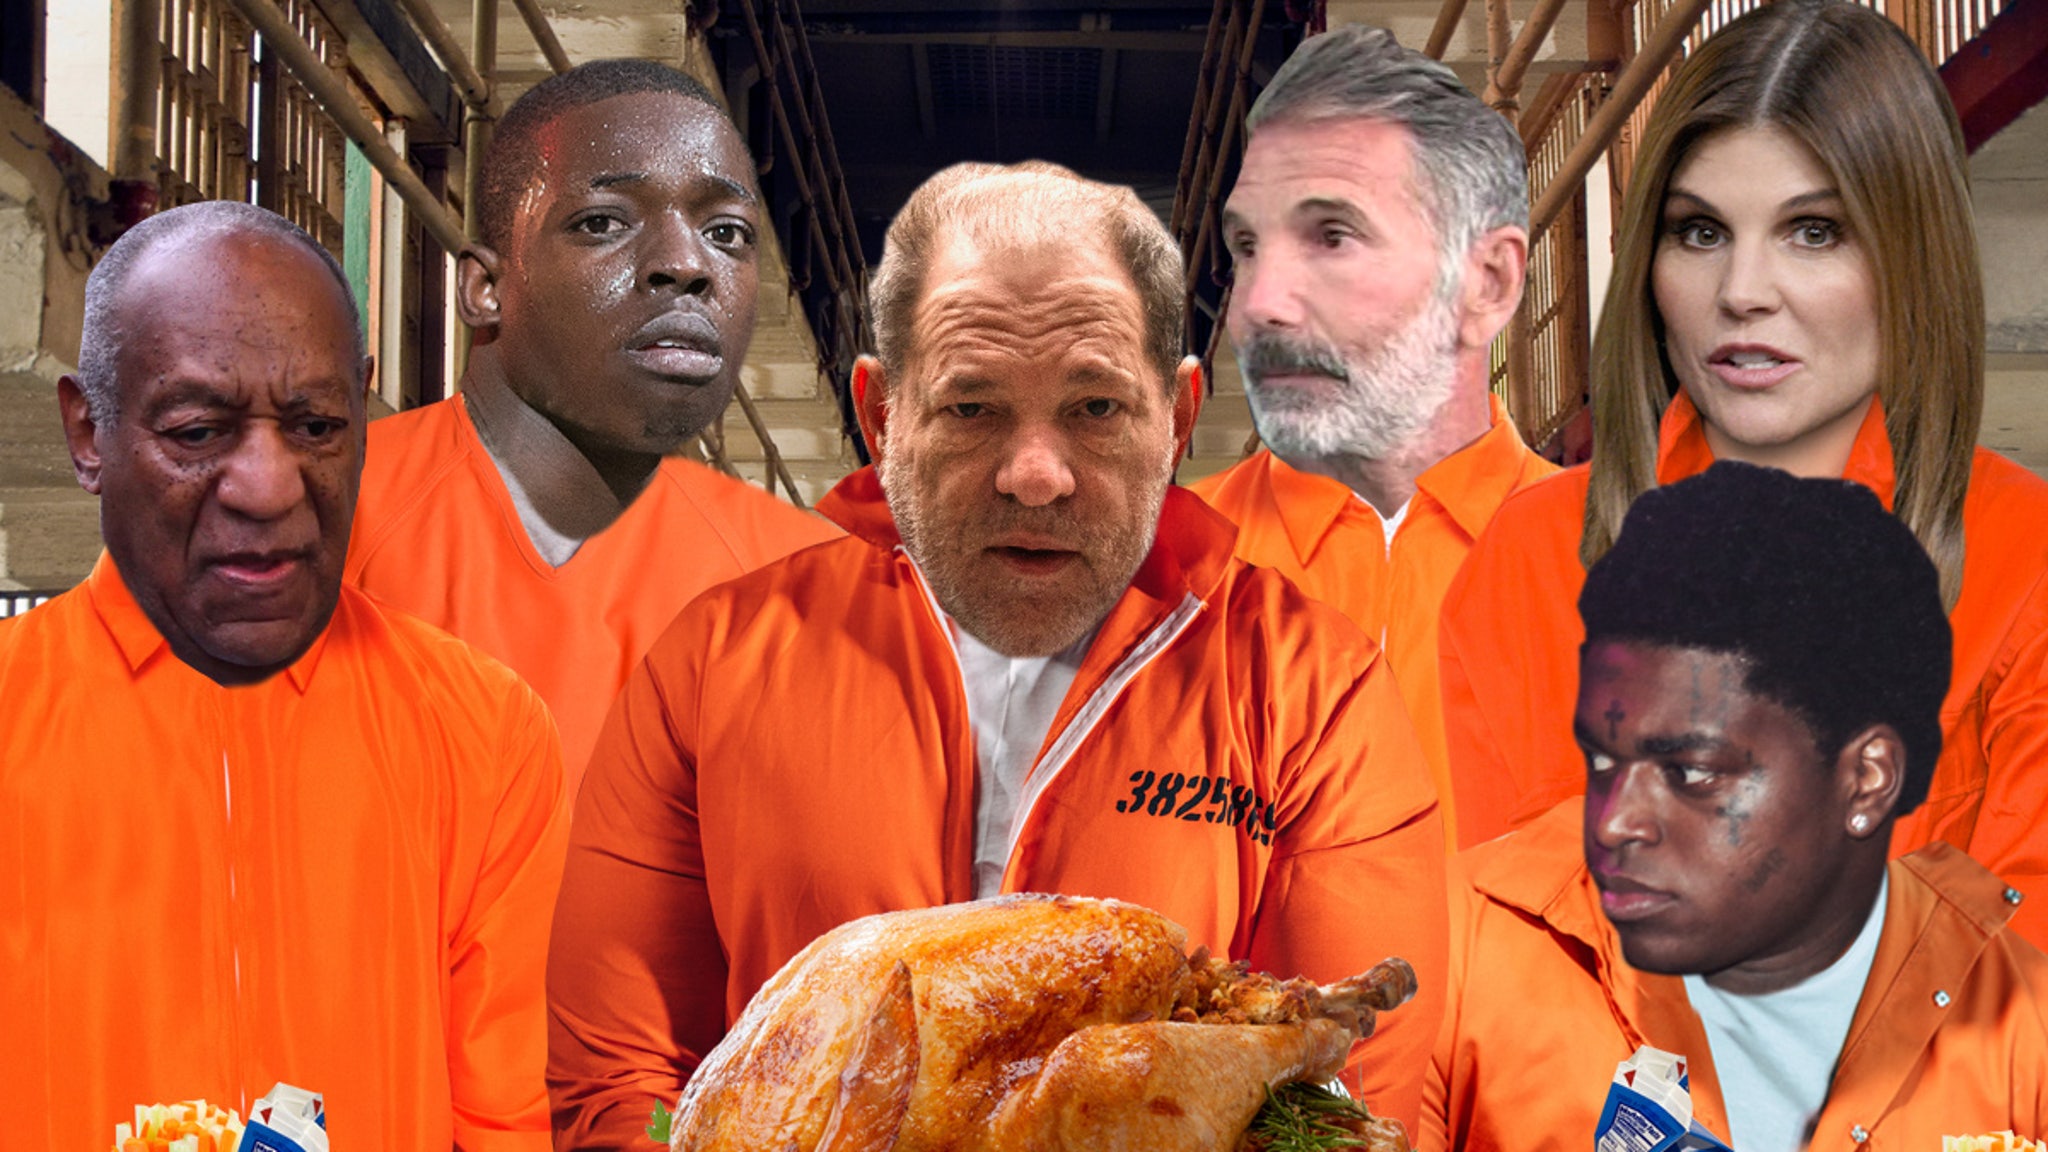 Celebrity Prisoners' 2020 Thanksgiving Prison Meals Revealed - TMZ